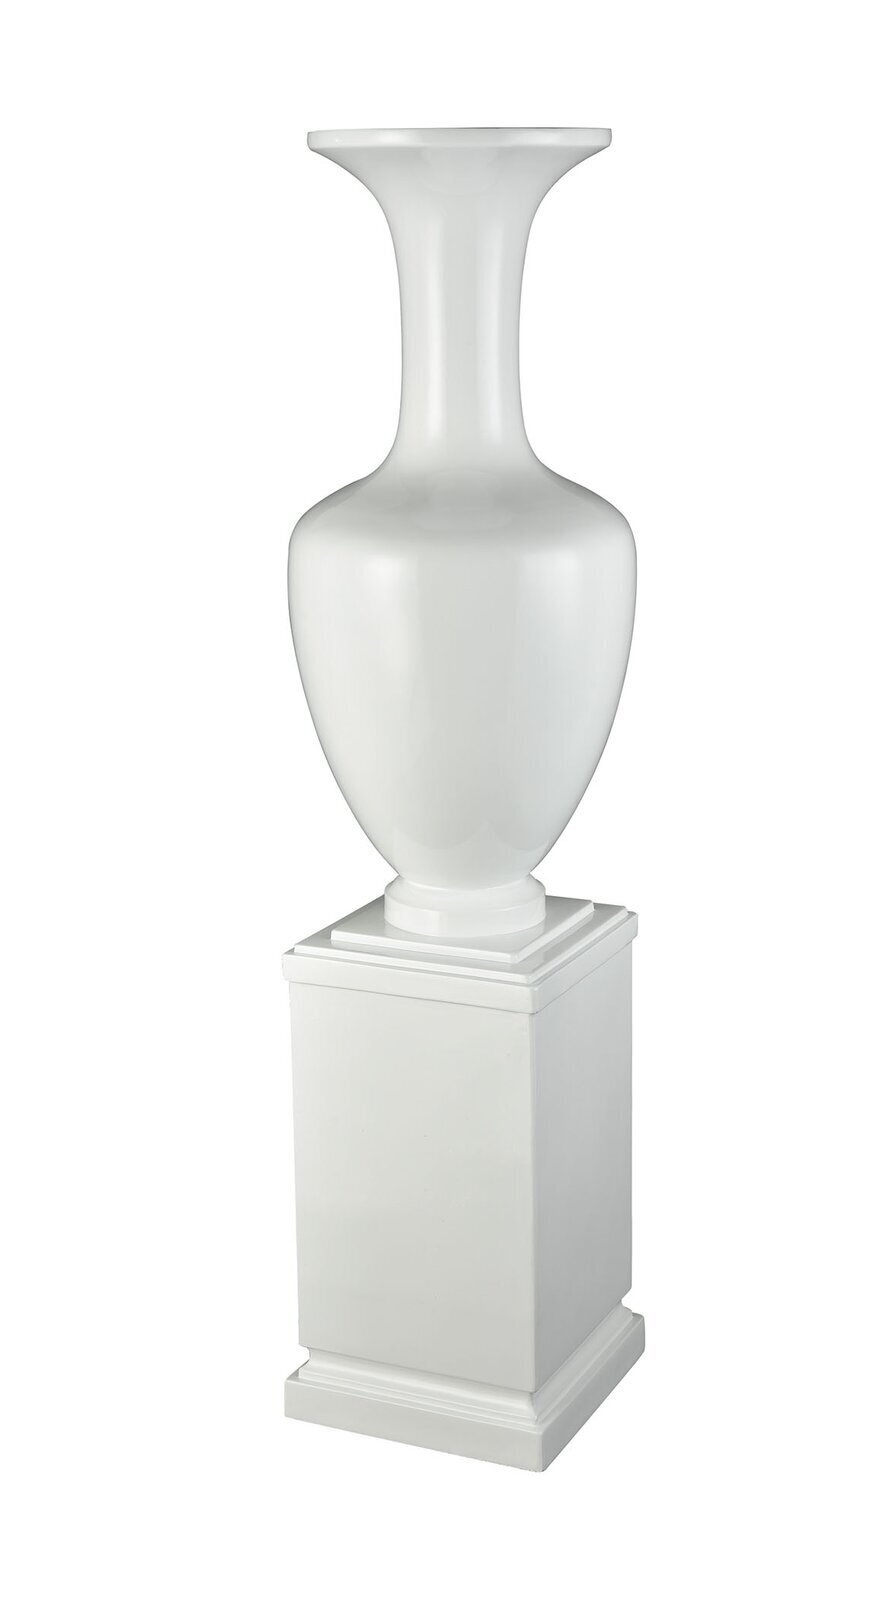 Luxurious White Glass Floor Vase on Pedestal